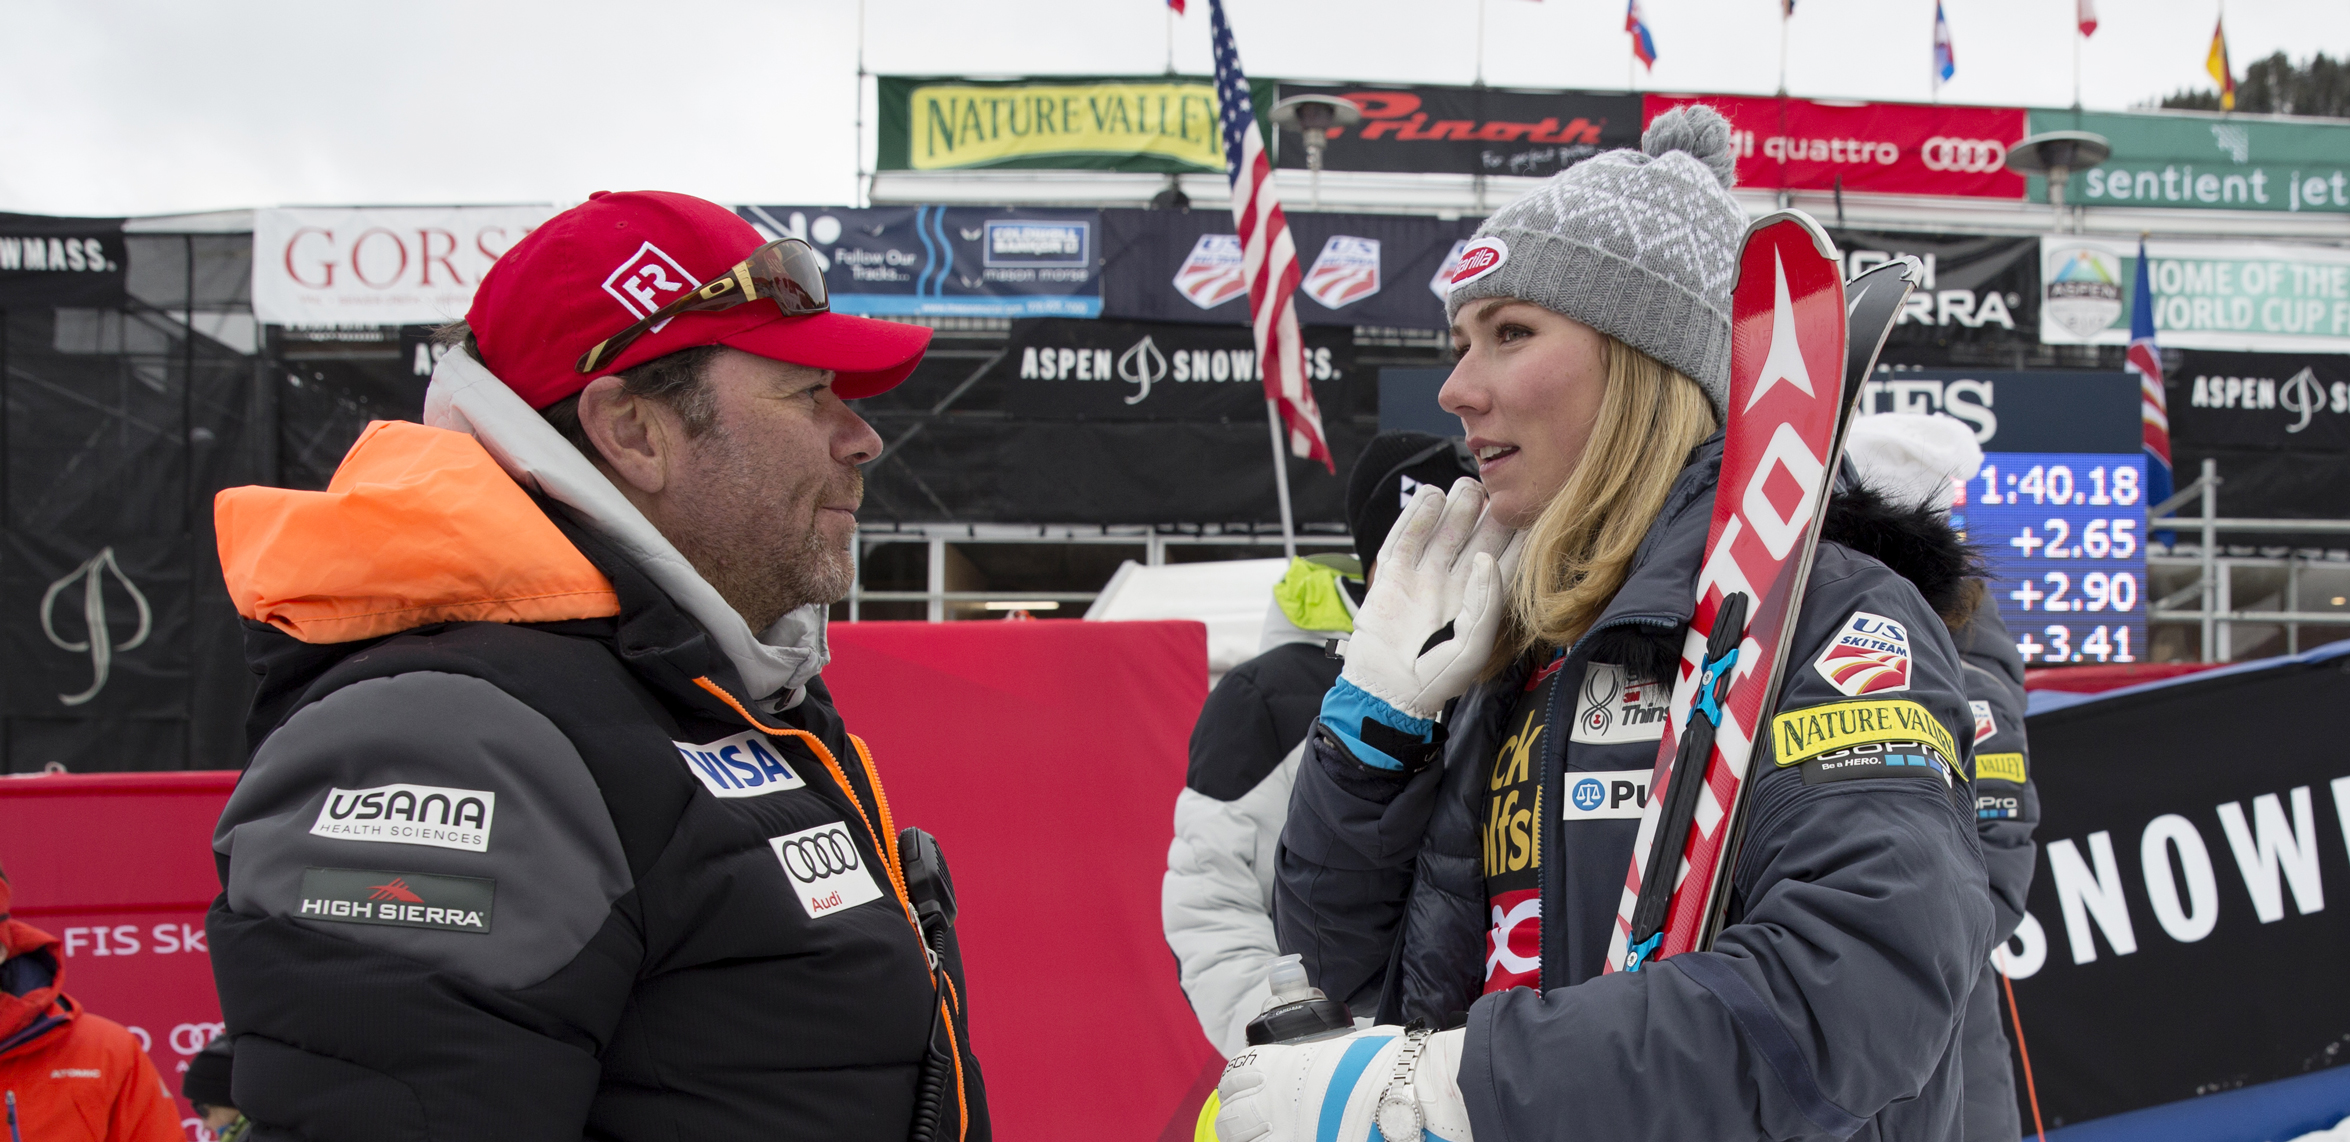 Patrick Riml has led some of the most successful athletes in U.S. Ski & Snowboard history, including Mikaela Shiffrin. (U.S. Ski & Snowboard)